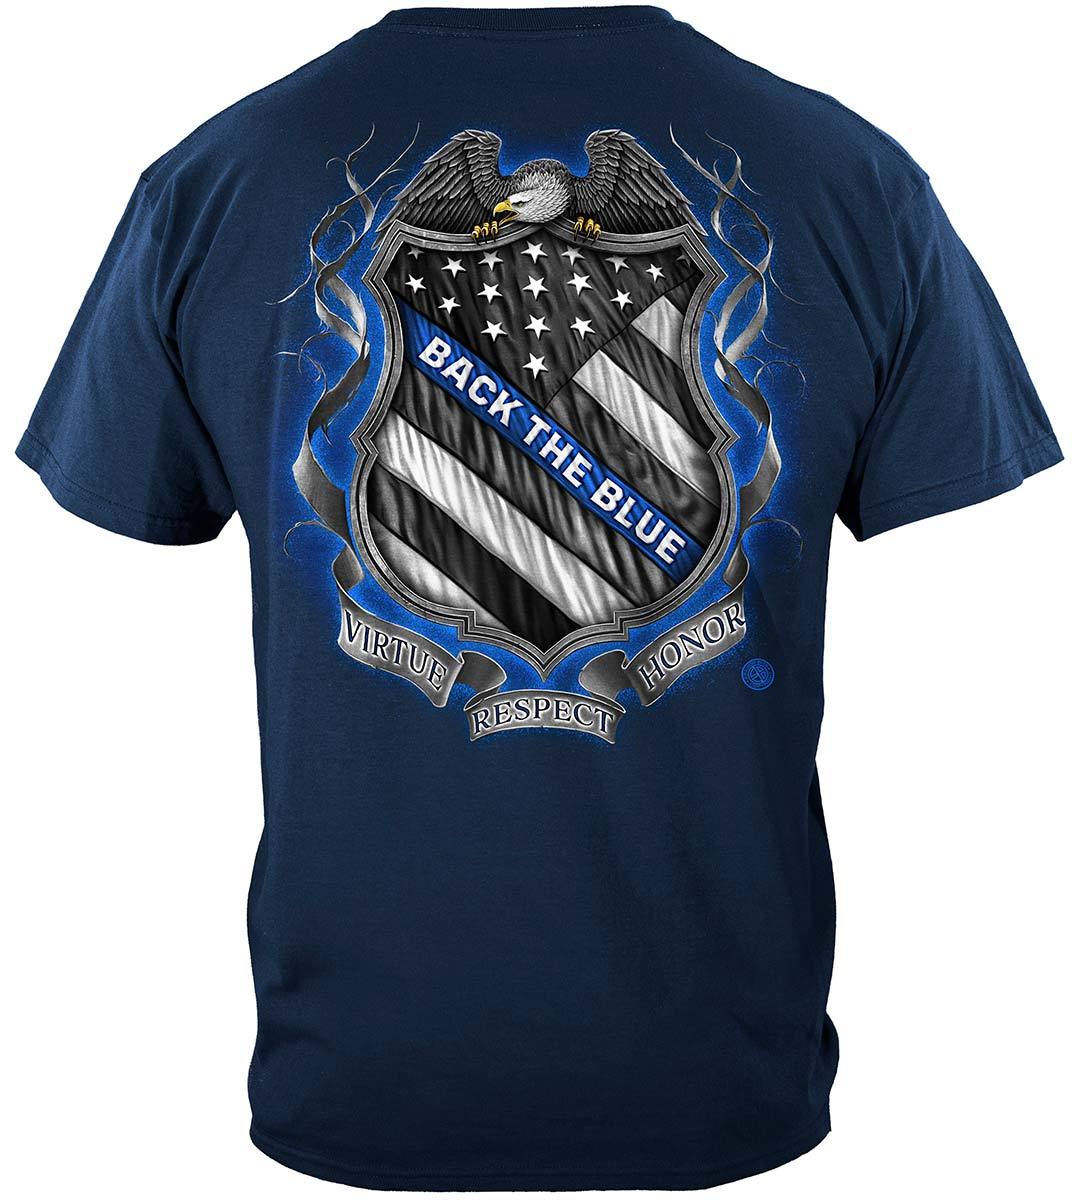 Law enforcement Back the Blue Virtue Respect Honor Premium Long Sleeves